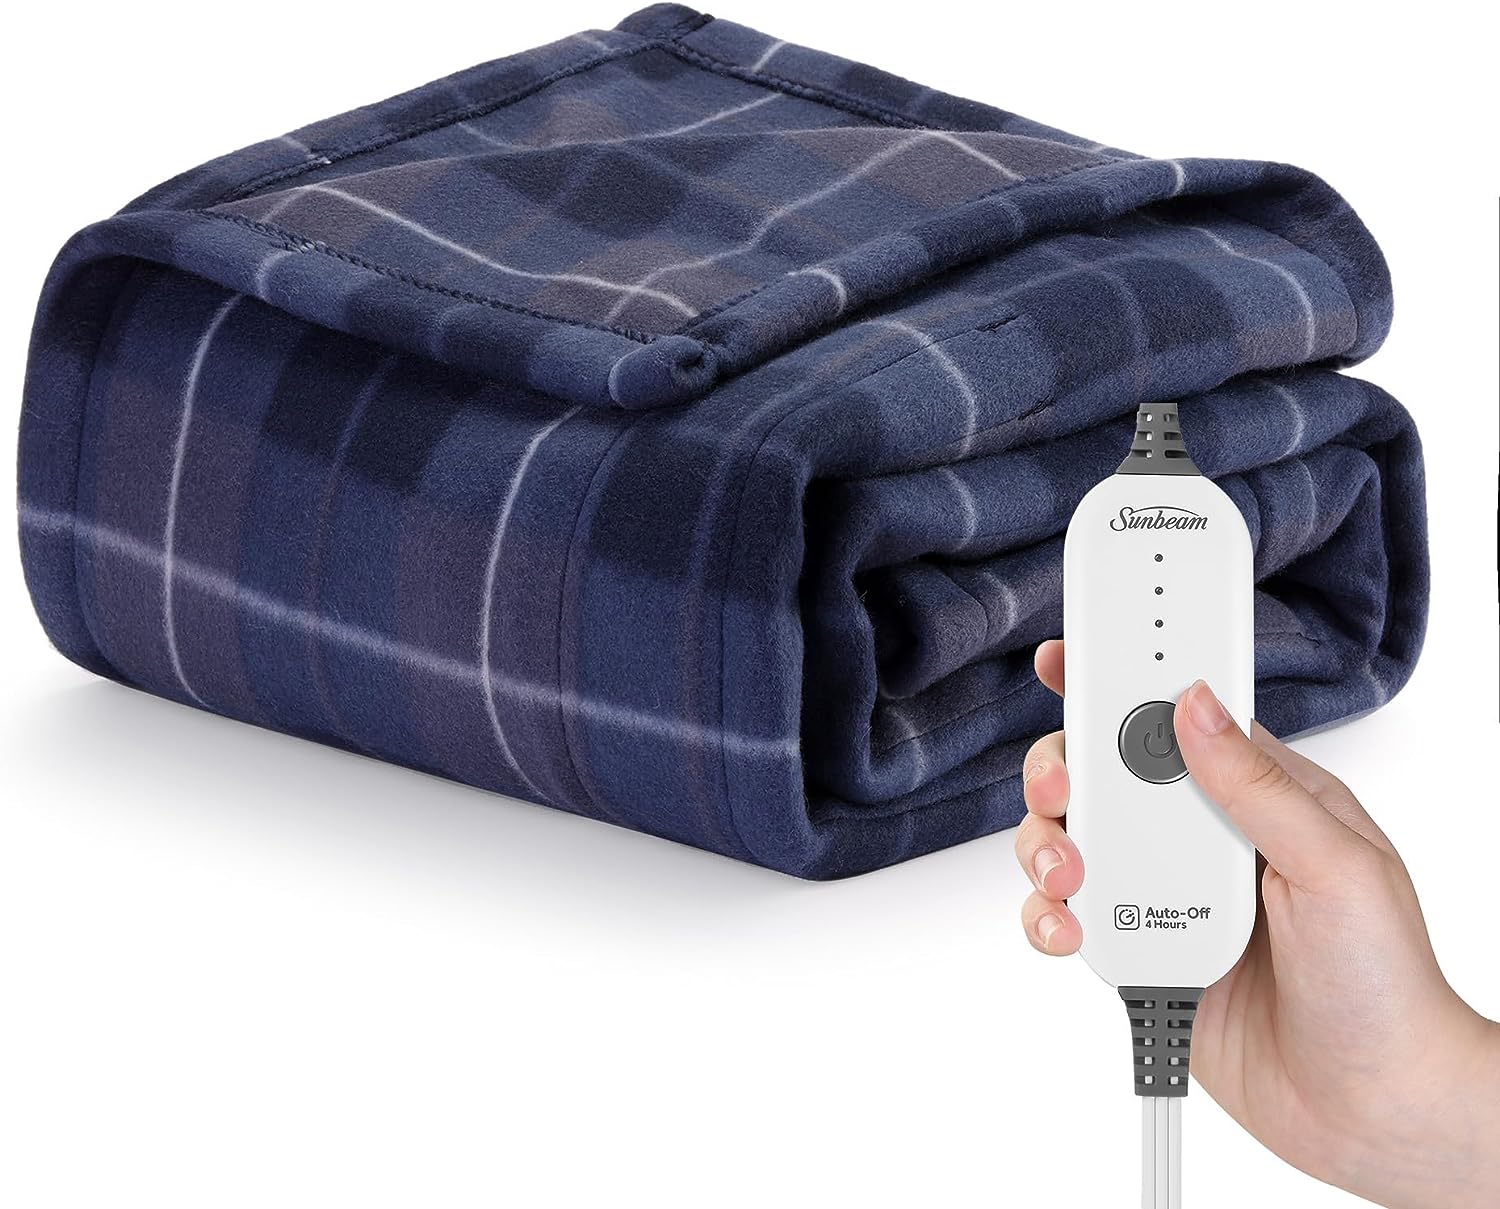 Cozy-Warm Throw Blanket Review